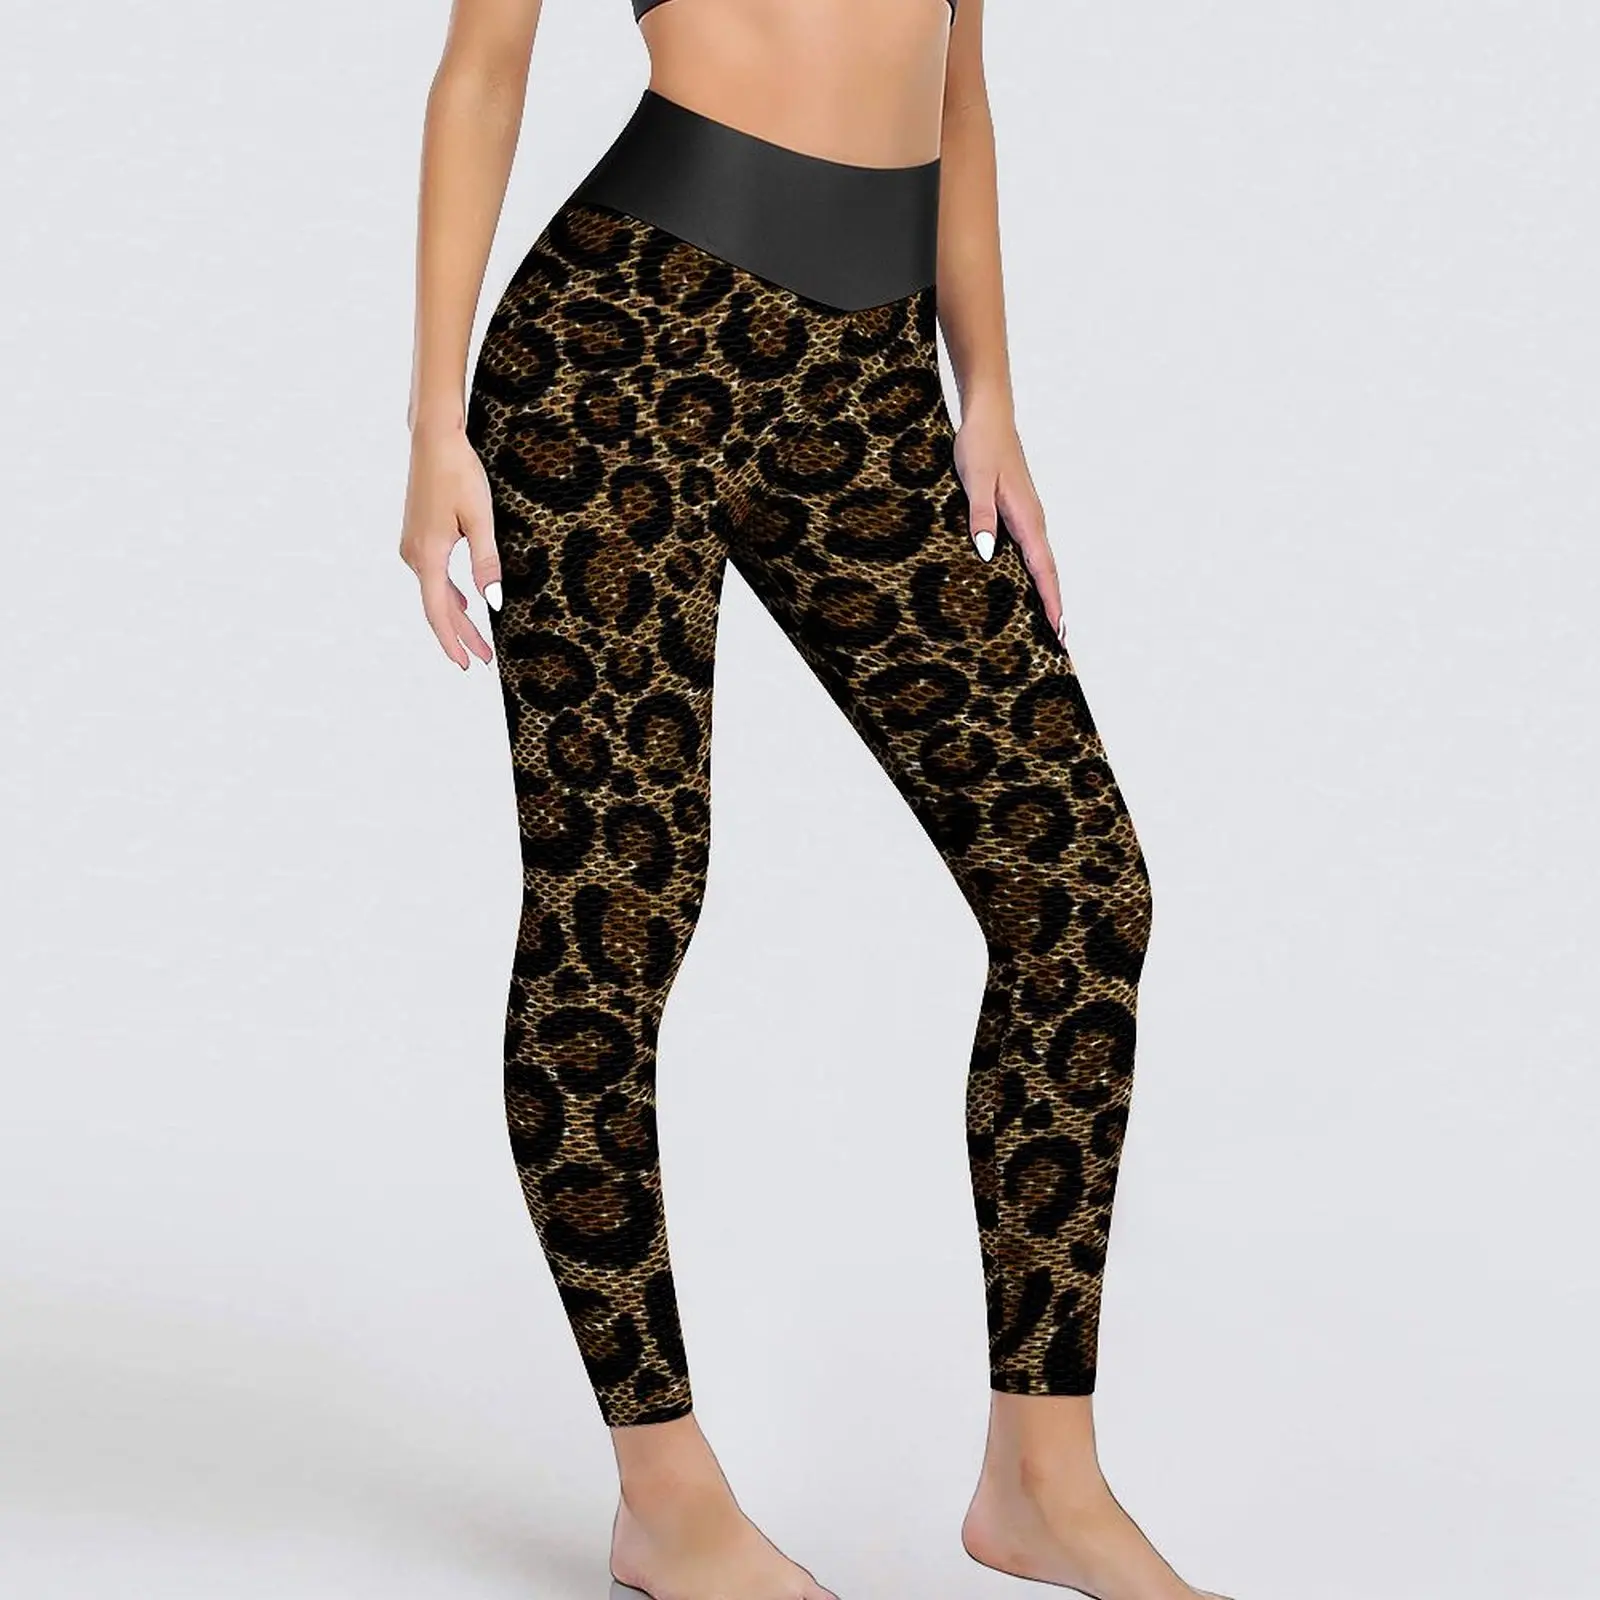 Bright Leopard Print Leggings Trendy Animal Gym Yoga Pants Lady Push Up Vintage Leggins Sexy Quick-Dry Design Sports Tights